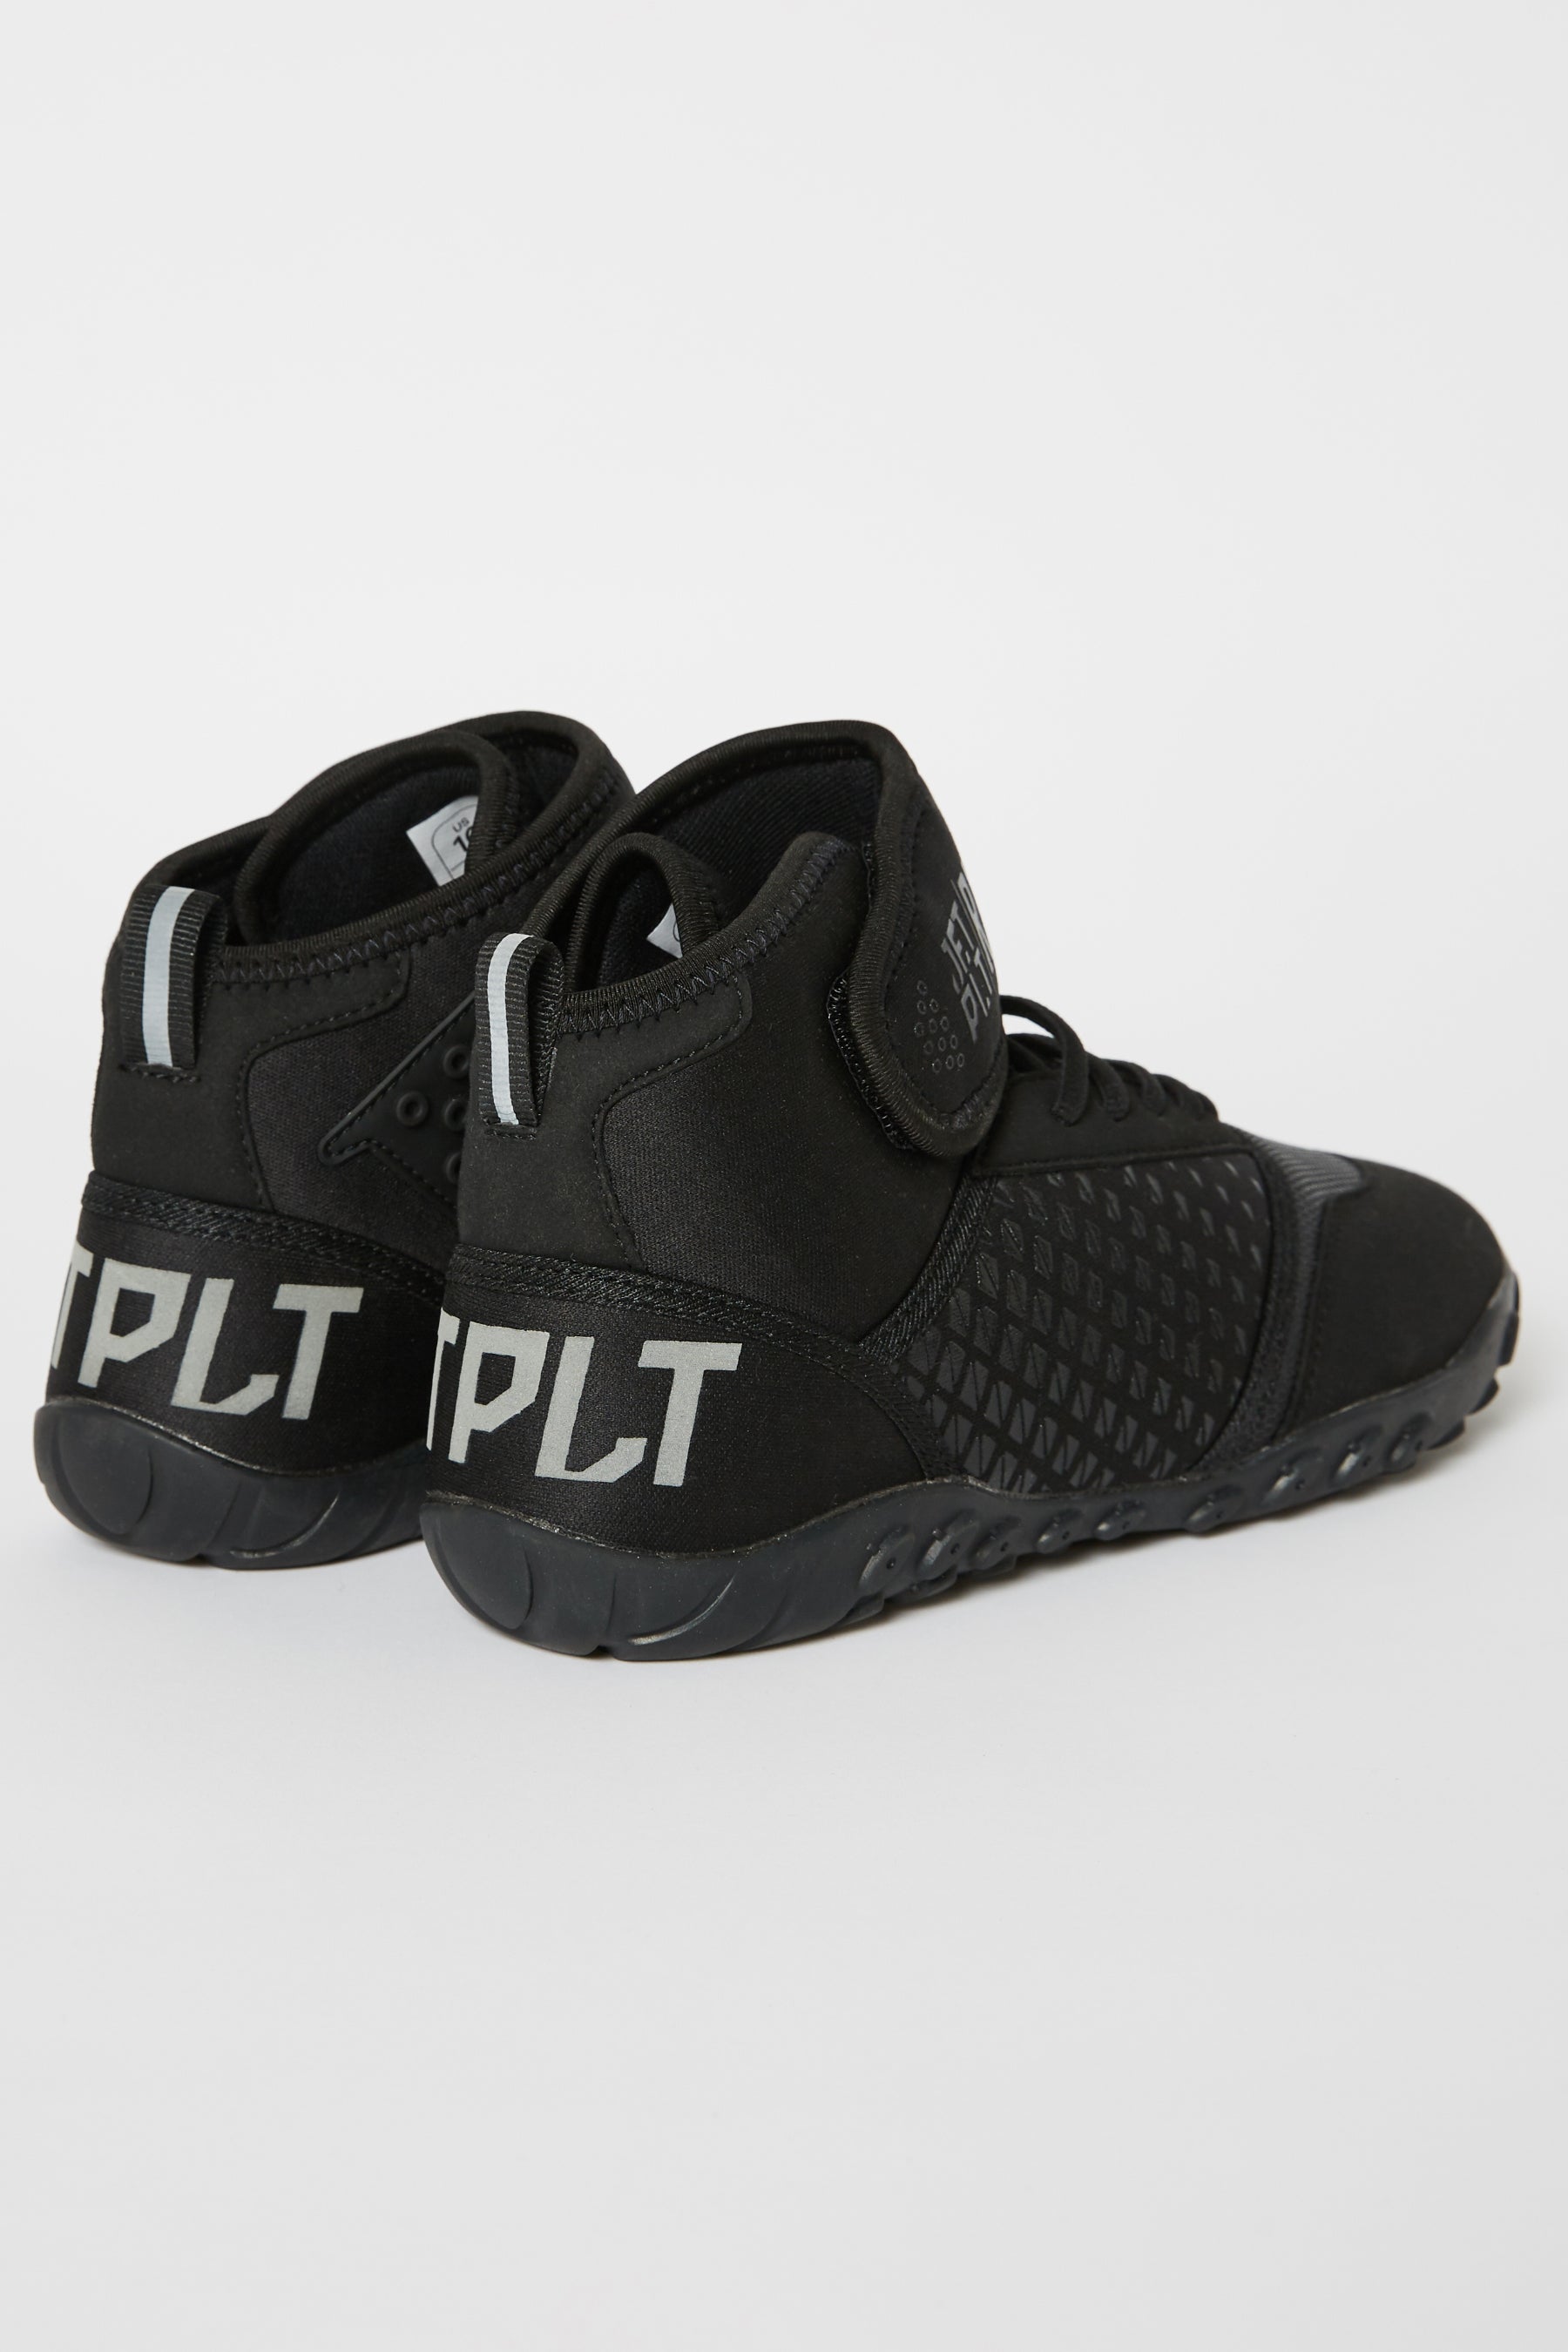 Jetpilot Rx Vault Race Boot & Sock - Black